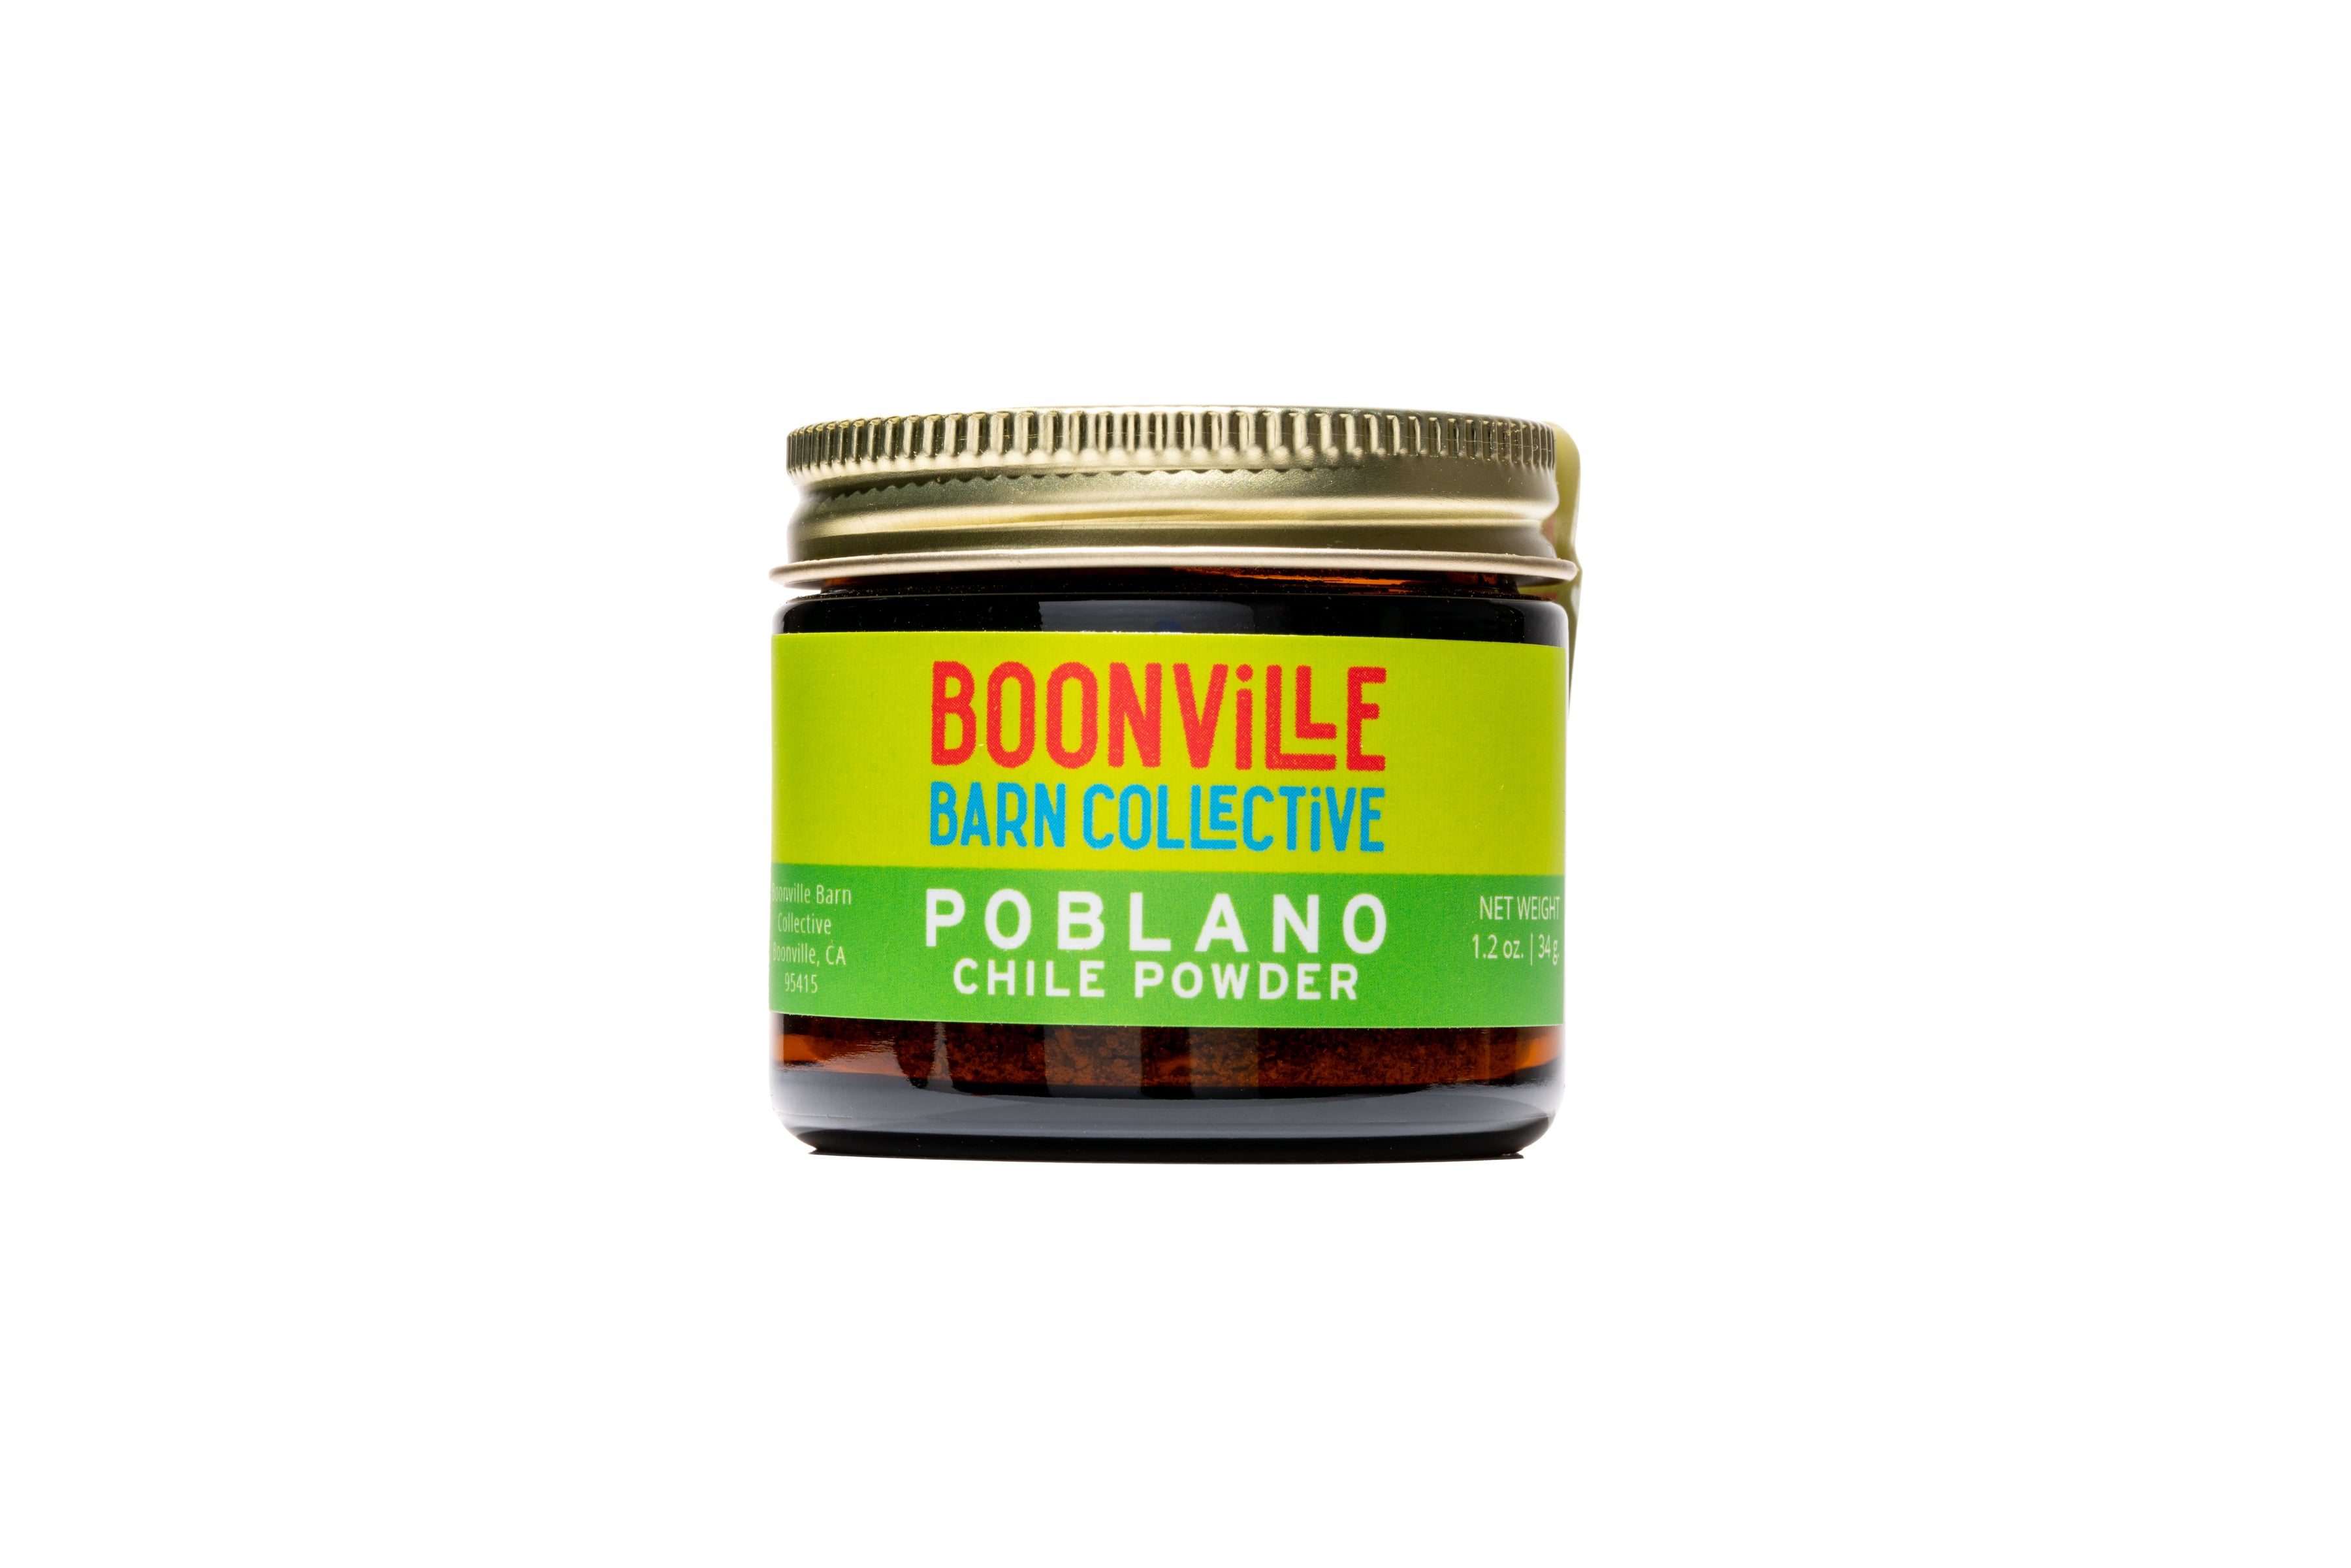 Poblano Chile Powder – Boonville Barn Collective